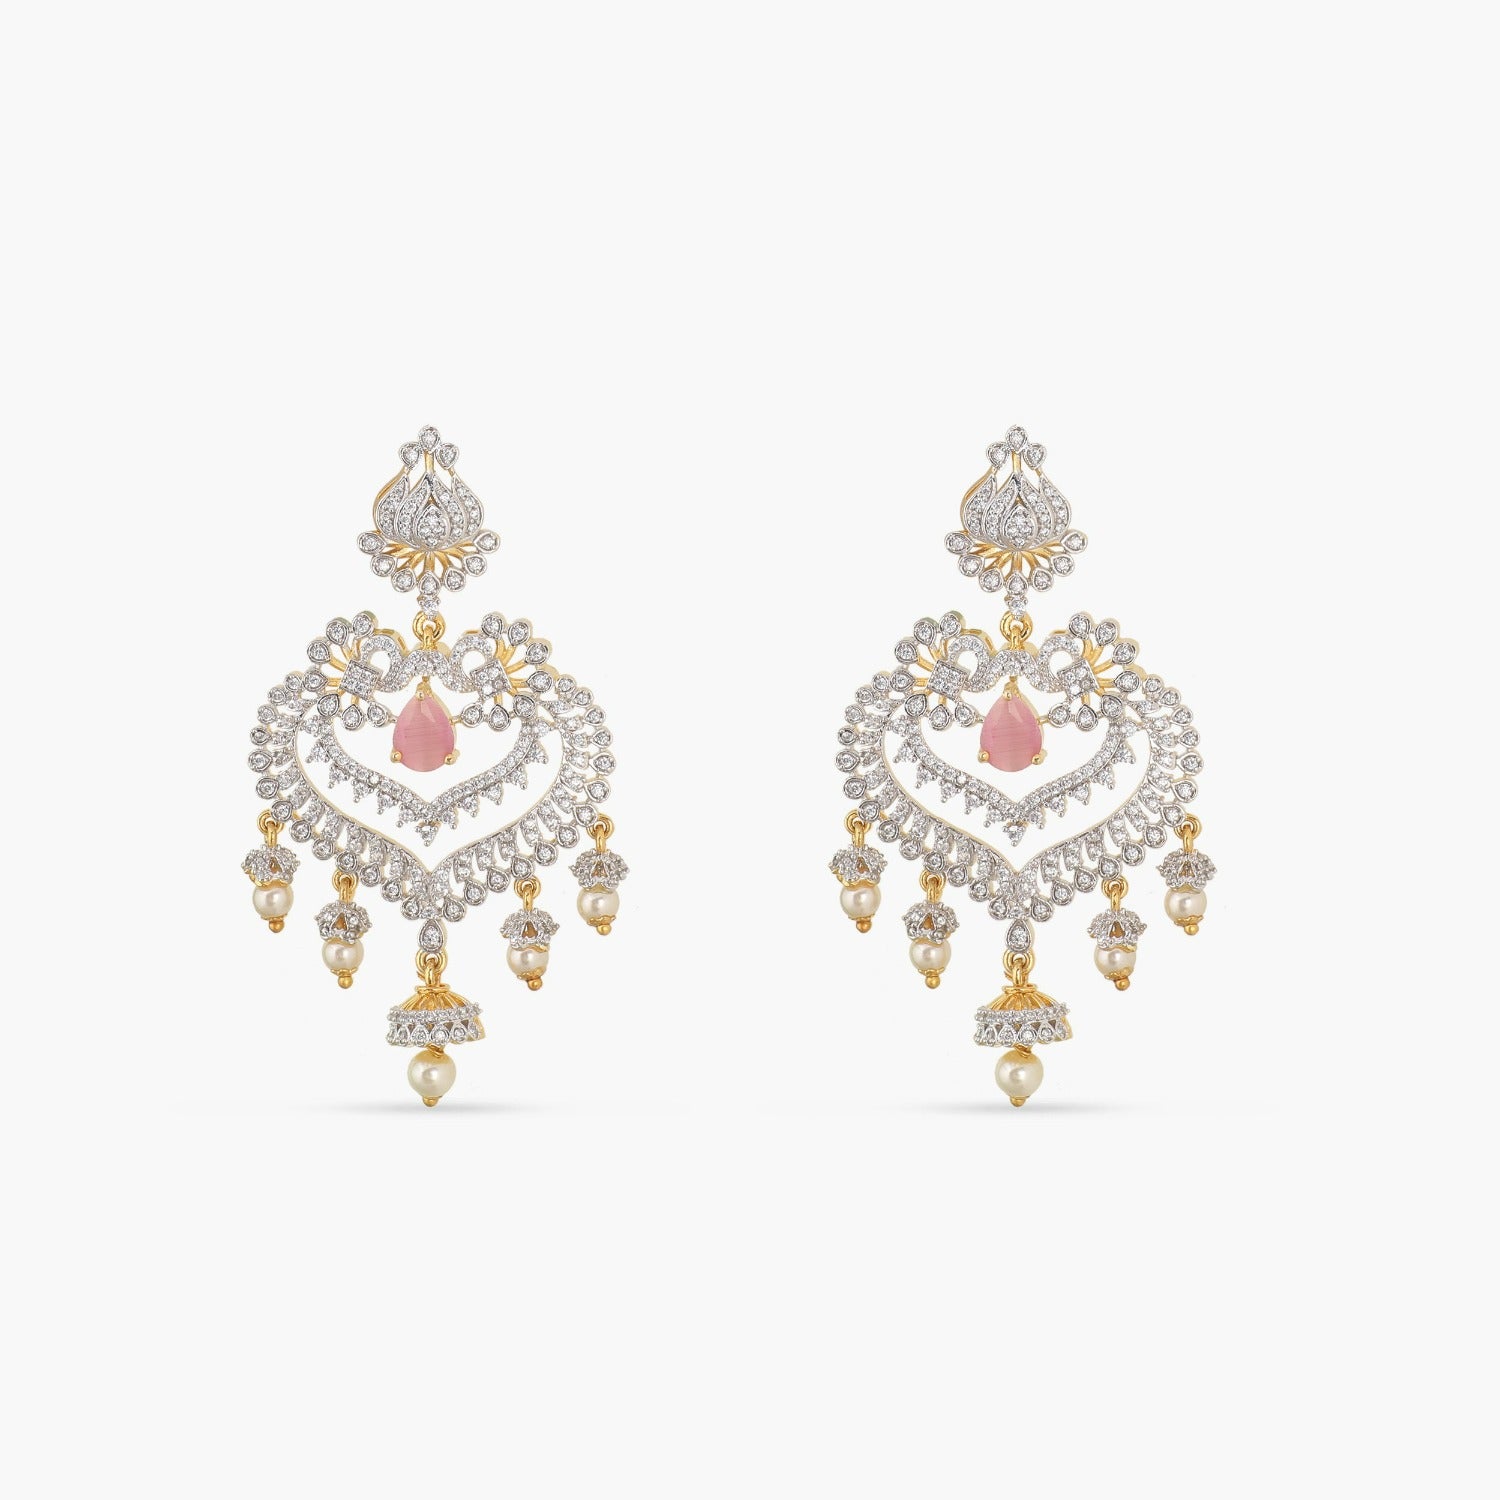 Shop Premium Indian Nakshatra CZ Earrings | Tarinika Page 2